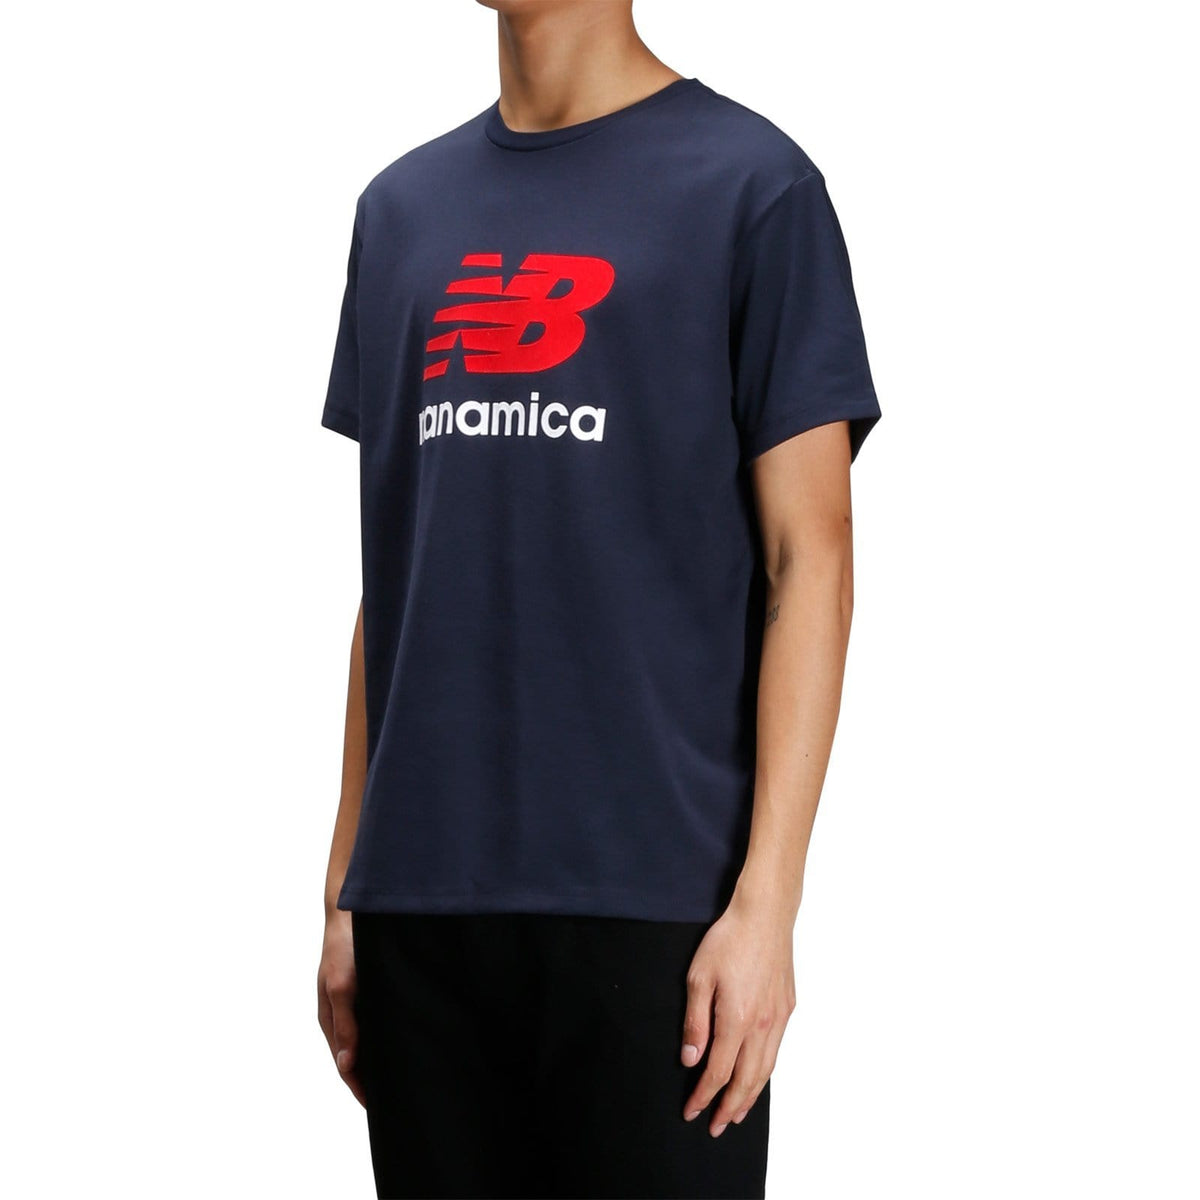 nanamica new balance t shirt